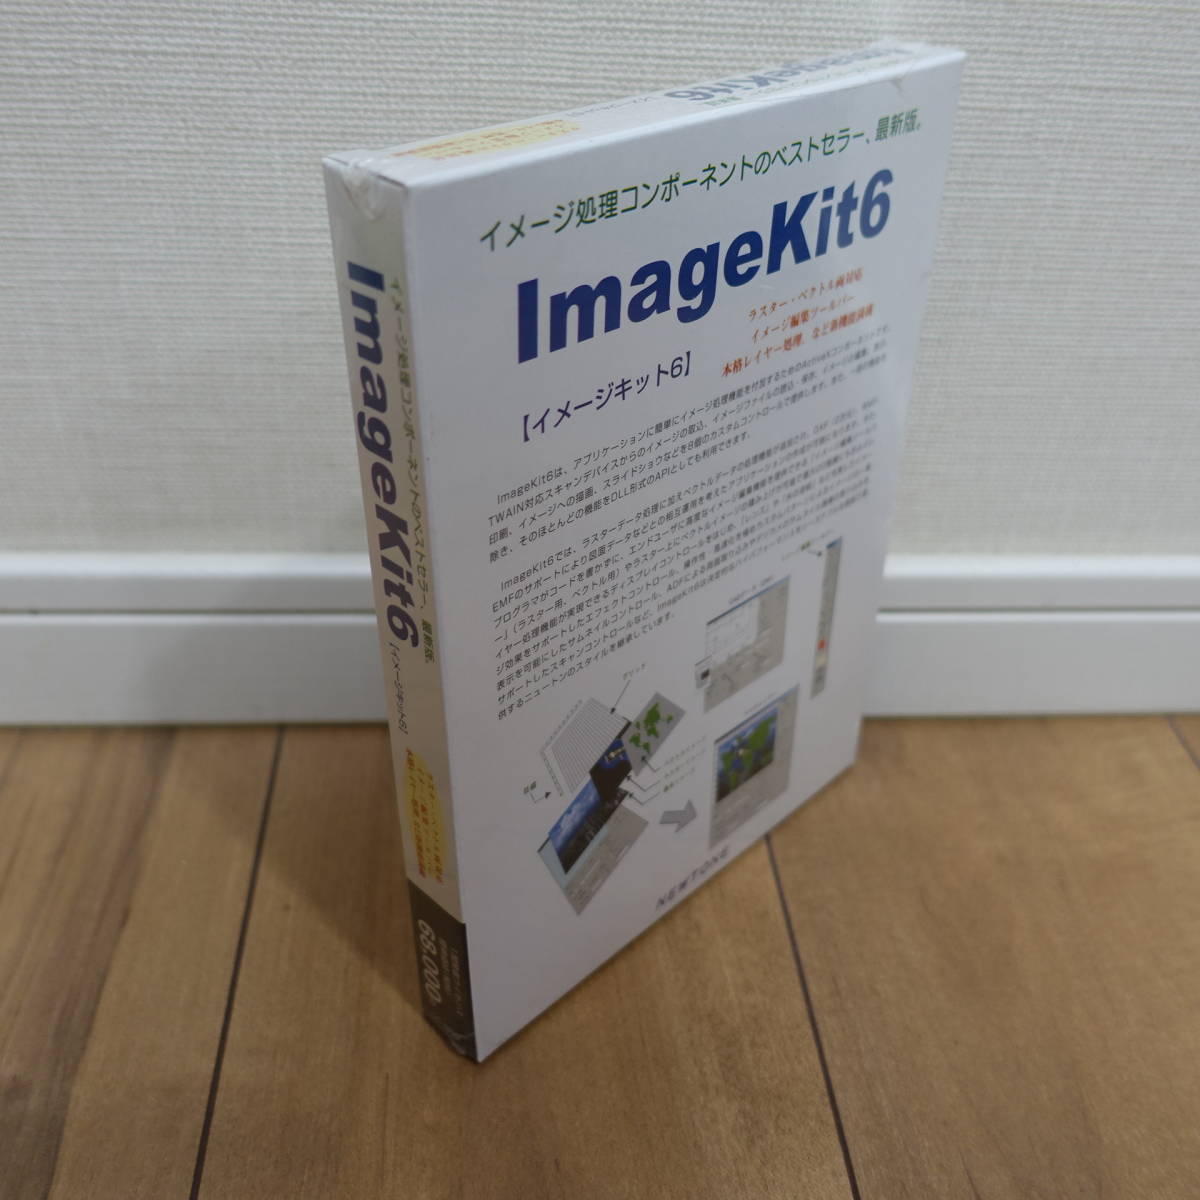 ImageKit6 image processing component ActiveX control +DLL unopened 